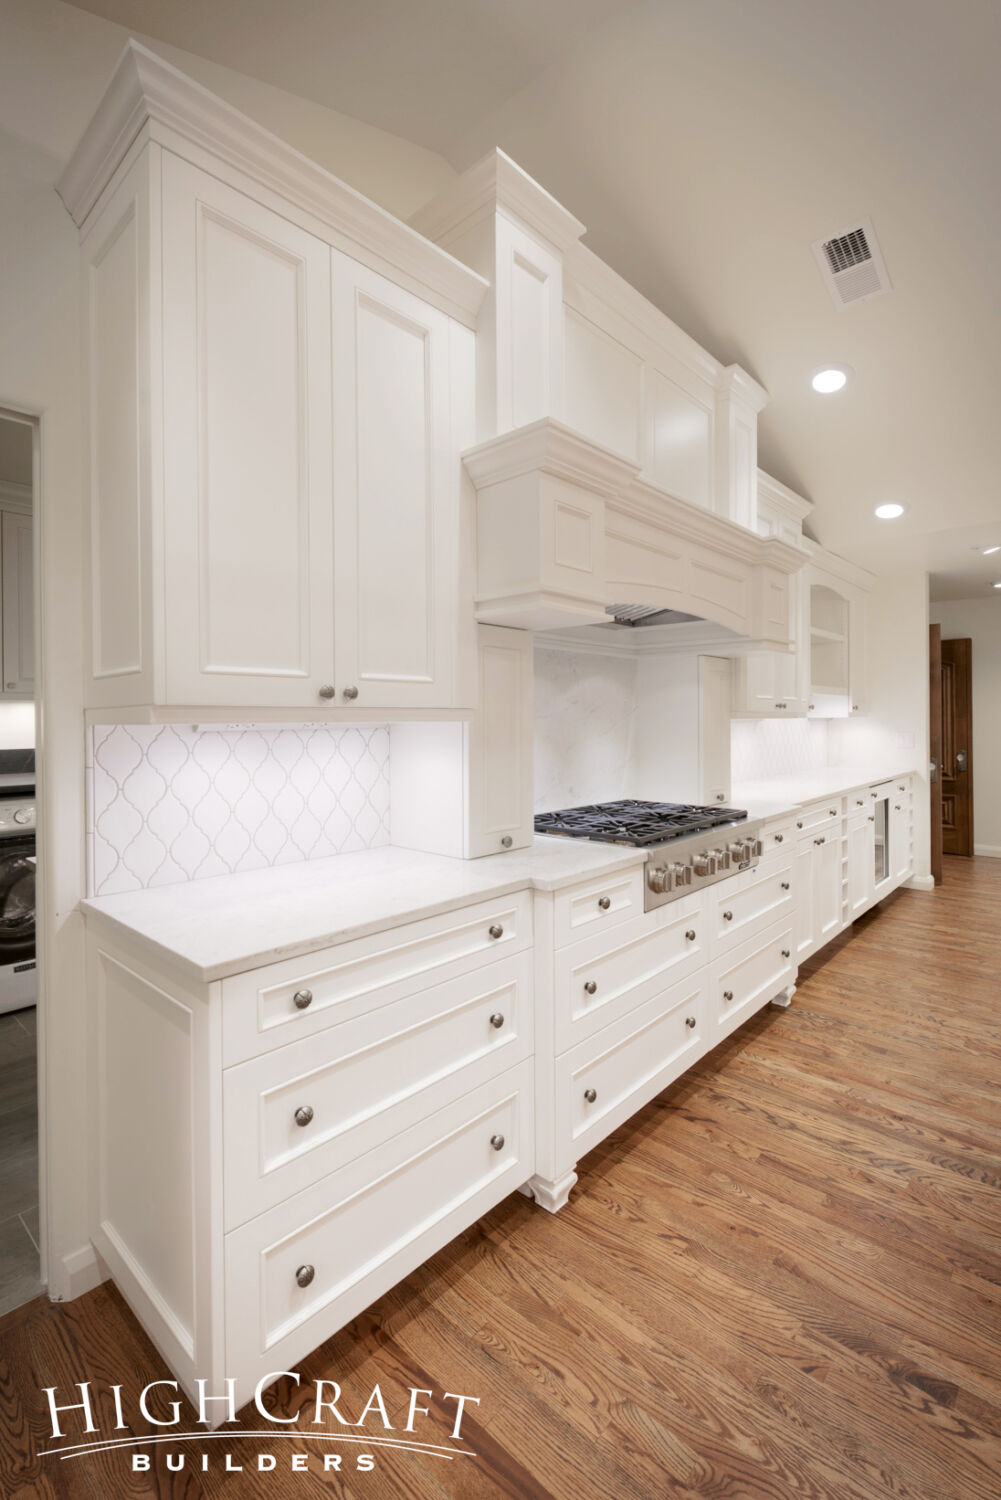 Kitchen-And-Great-Room-Addition-White-Cabinets-Range-Hood-Furniture-Leg-Quartz-Countertops-Arabesque-Tile